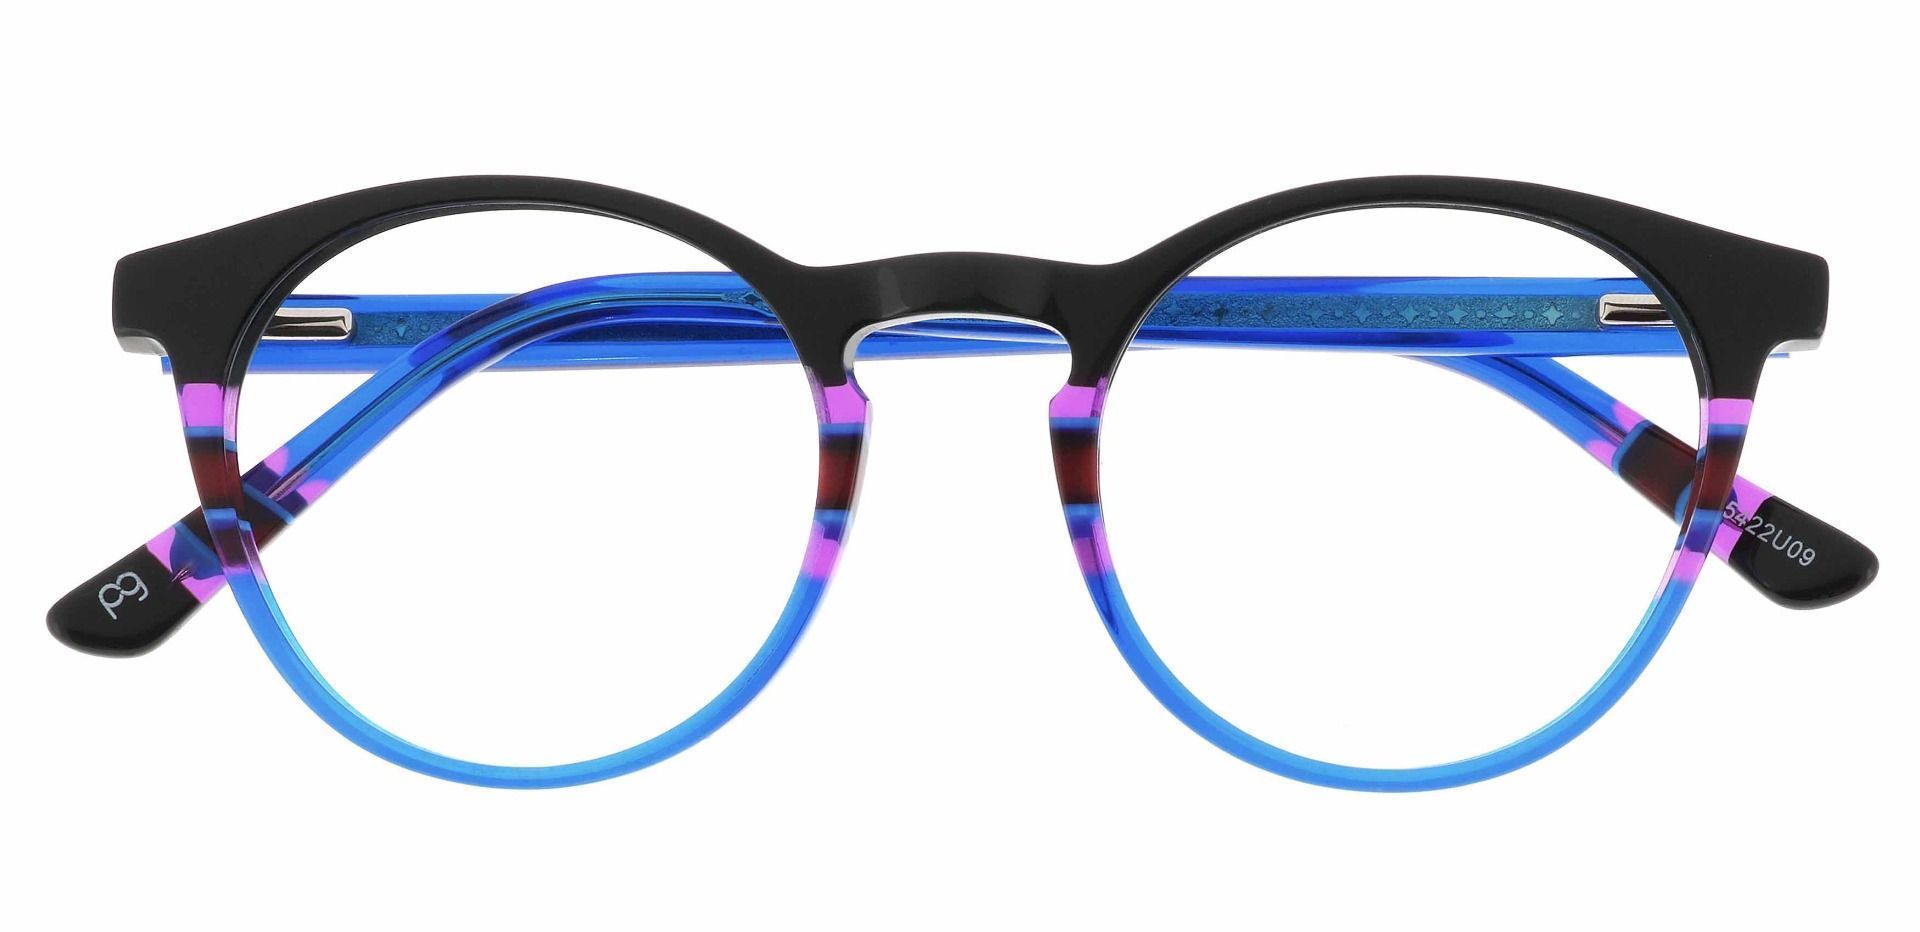 Jellie Round Progressive Glasses - Black/royal Blue Stripe